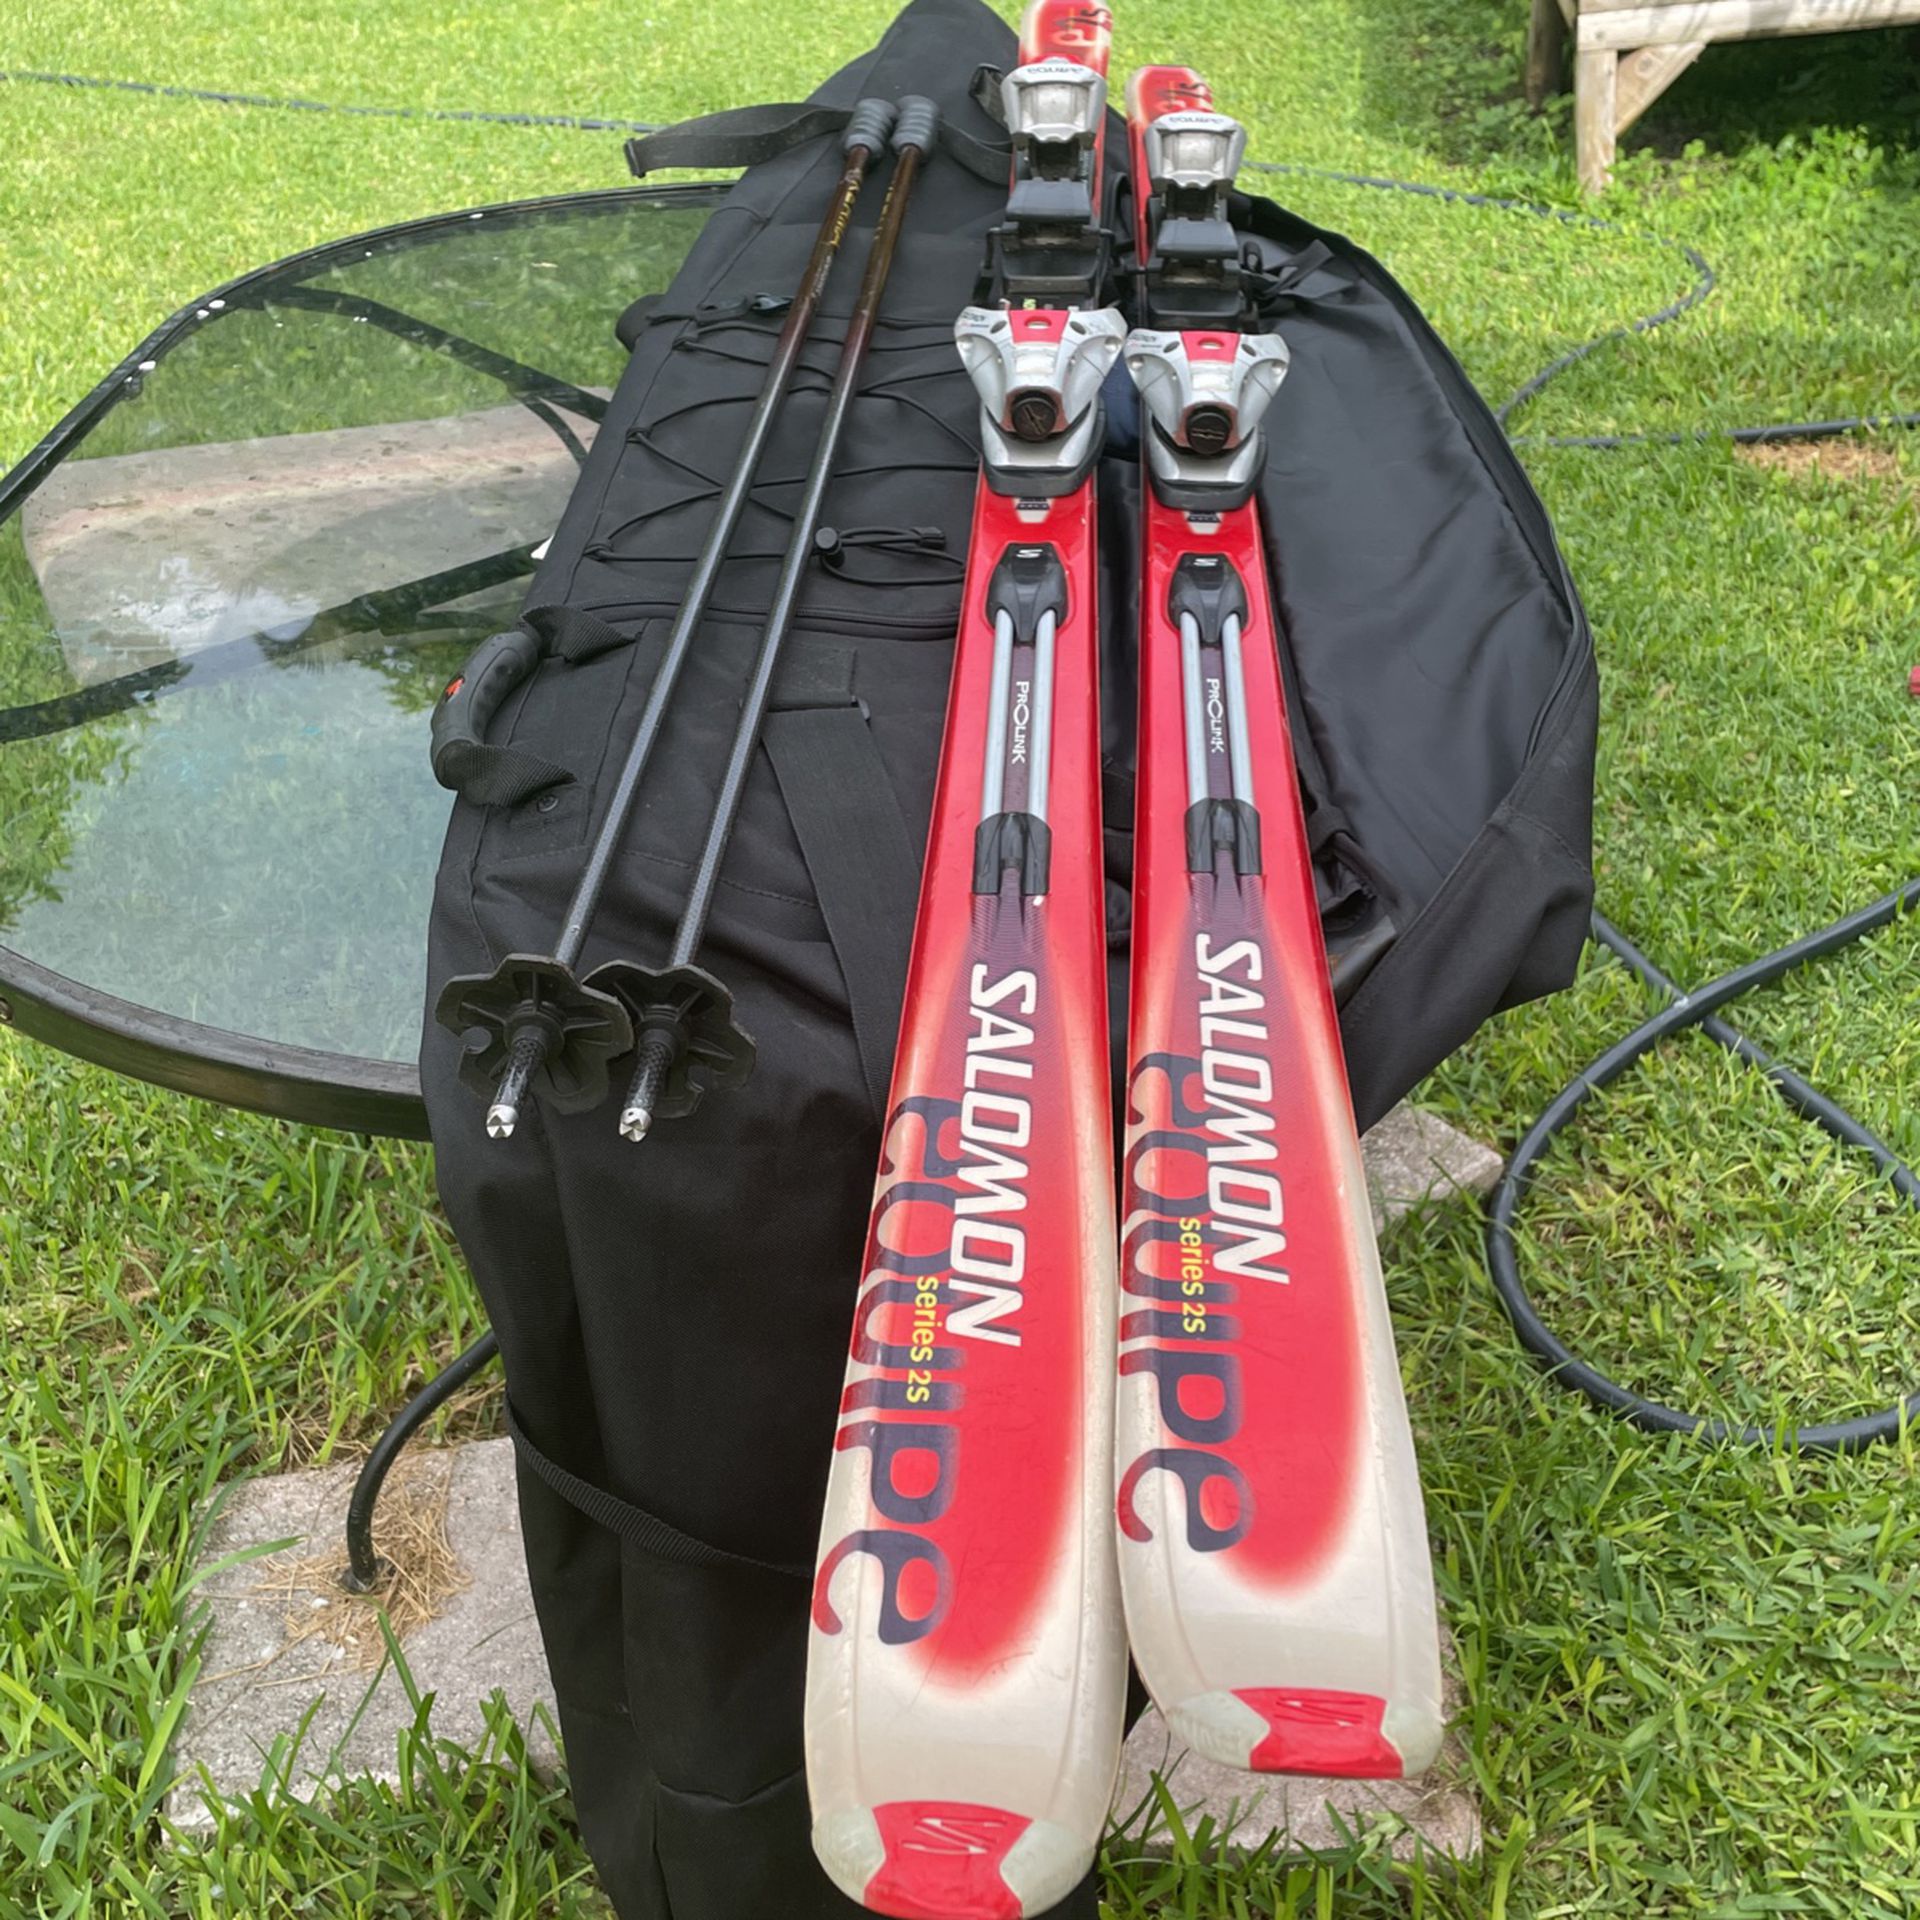 Skis (Salomon Series 2s), Poles And Bag